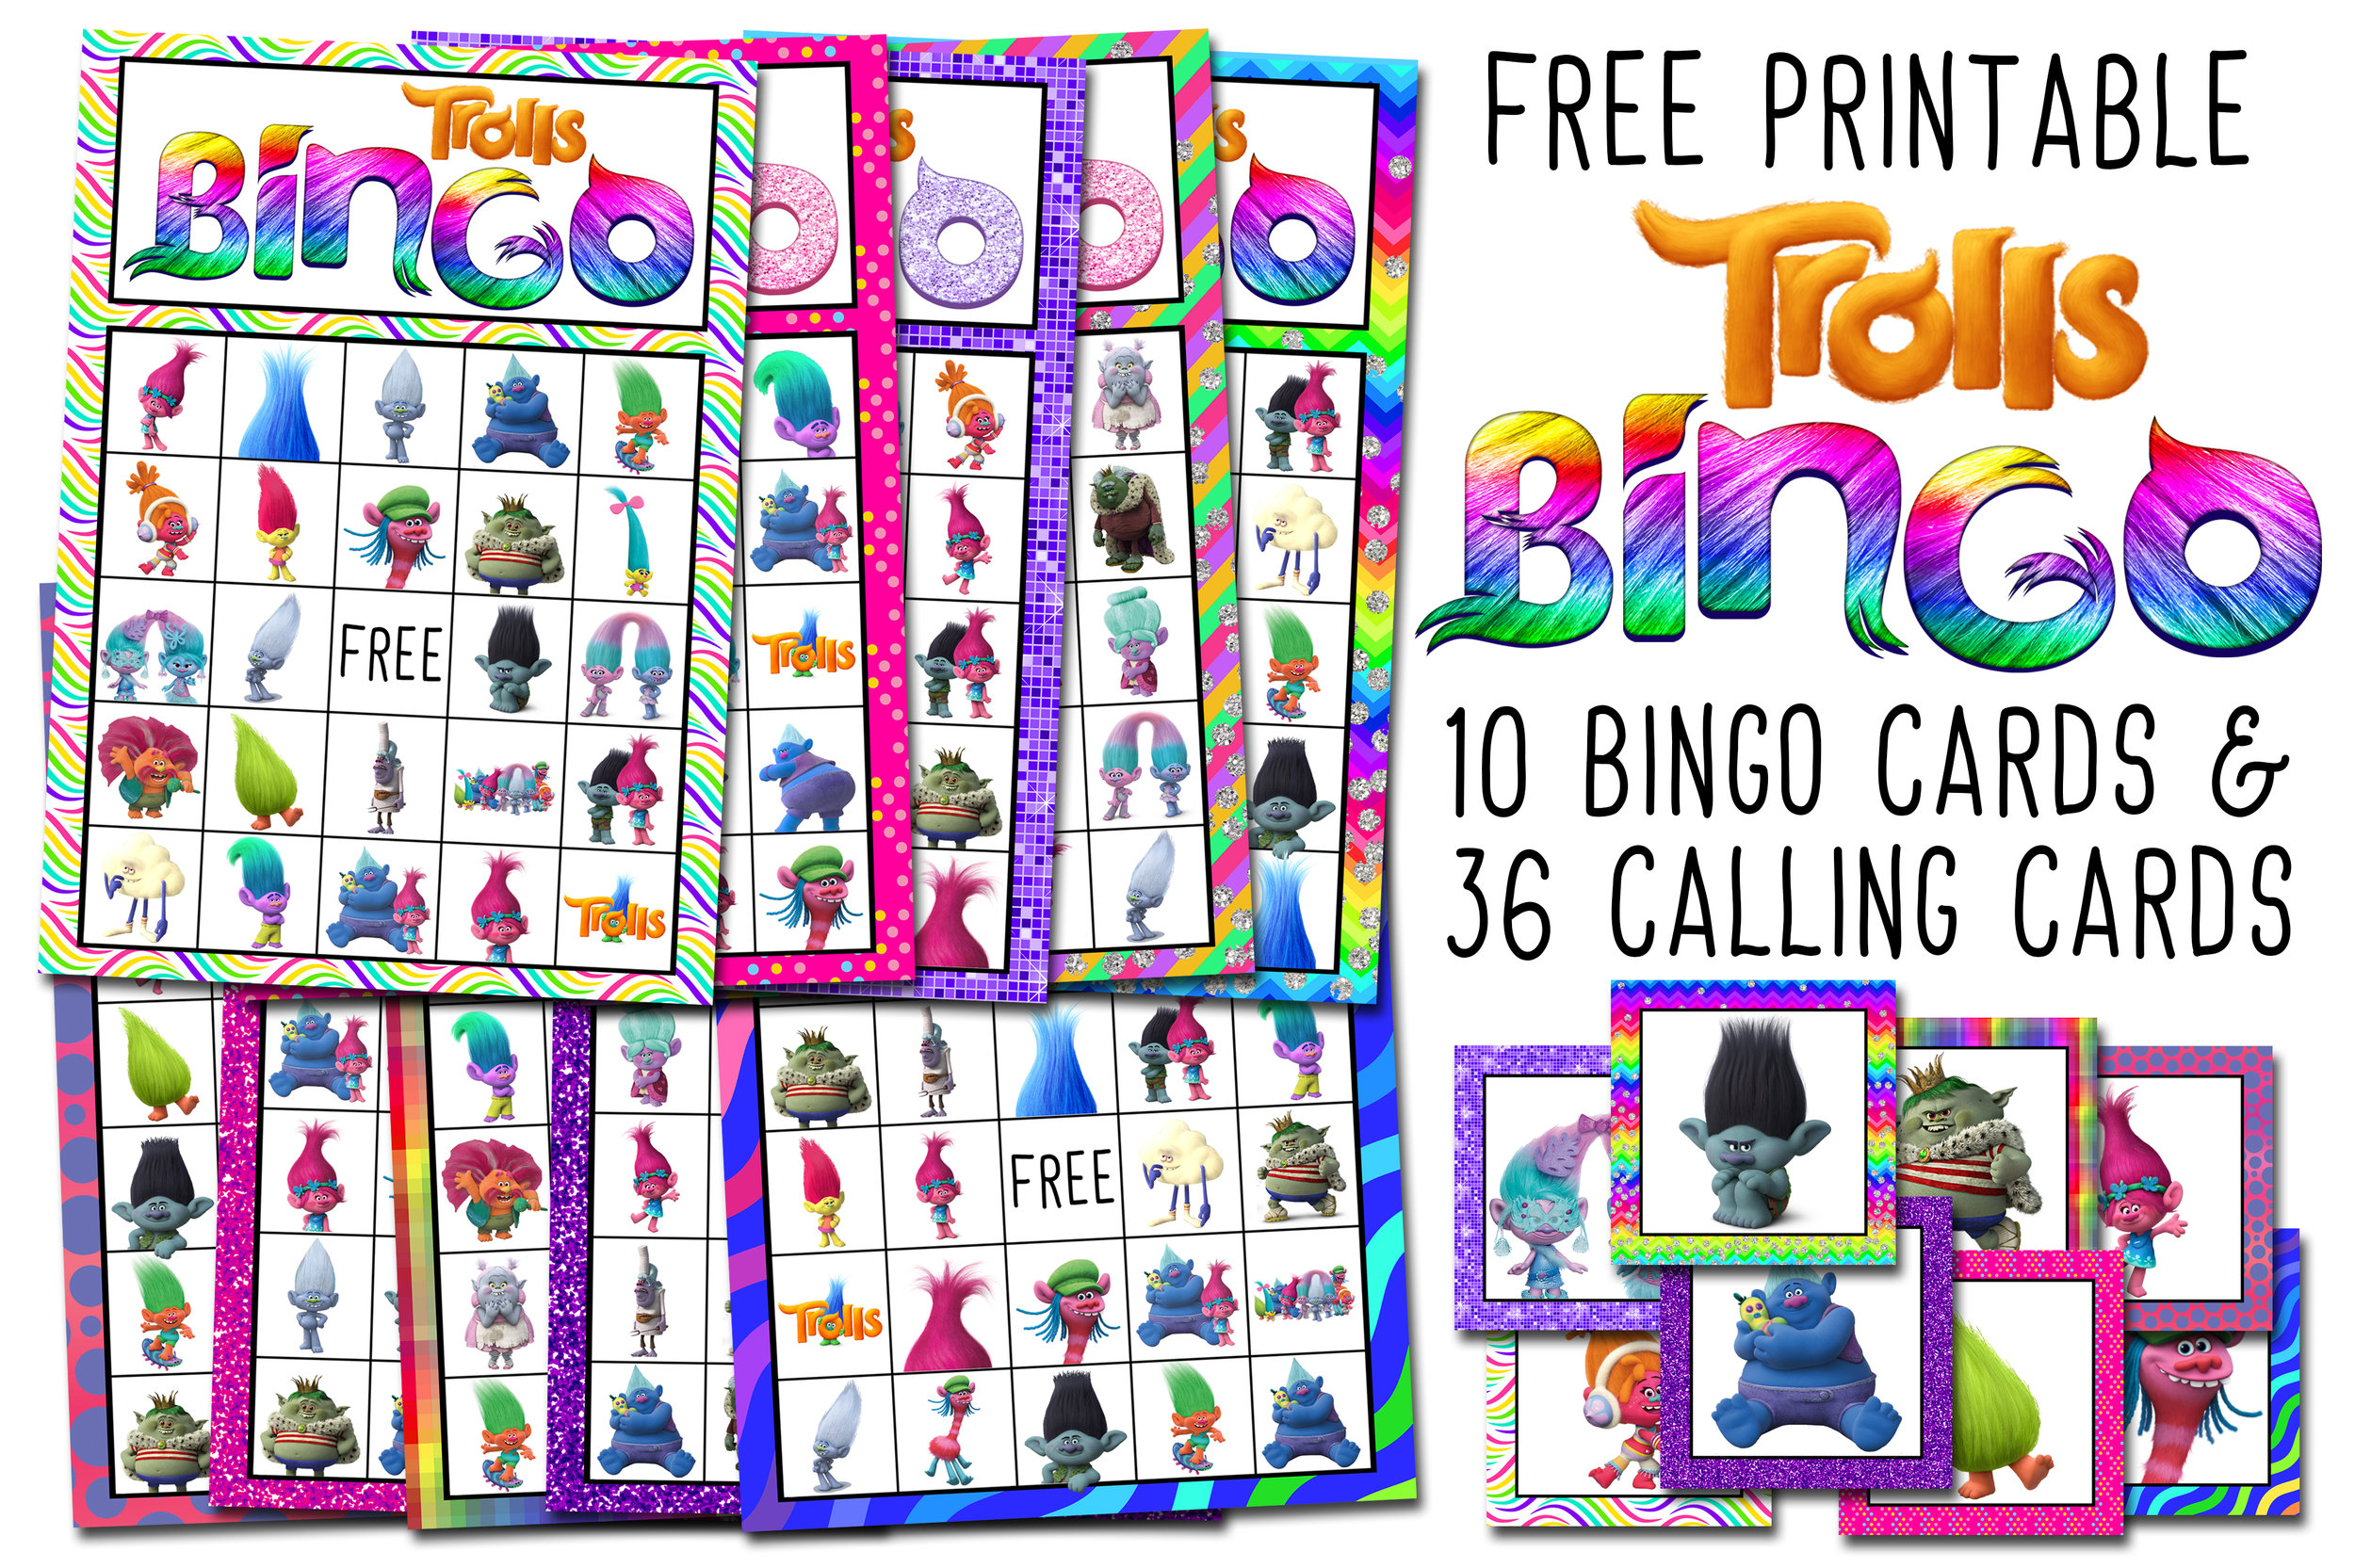 Free Trolls Printable Bingo Game Cards